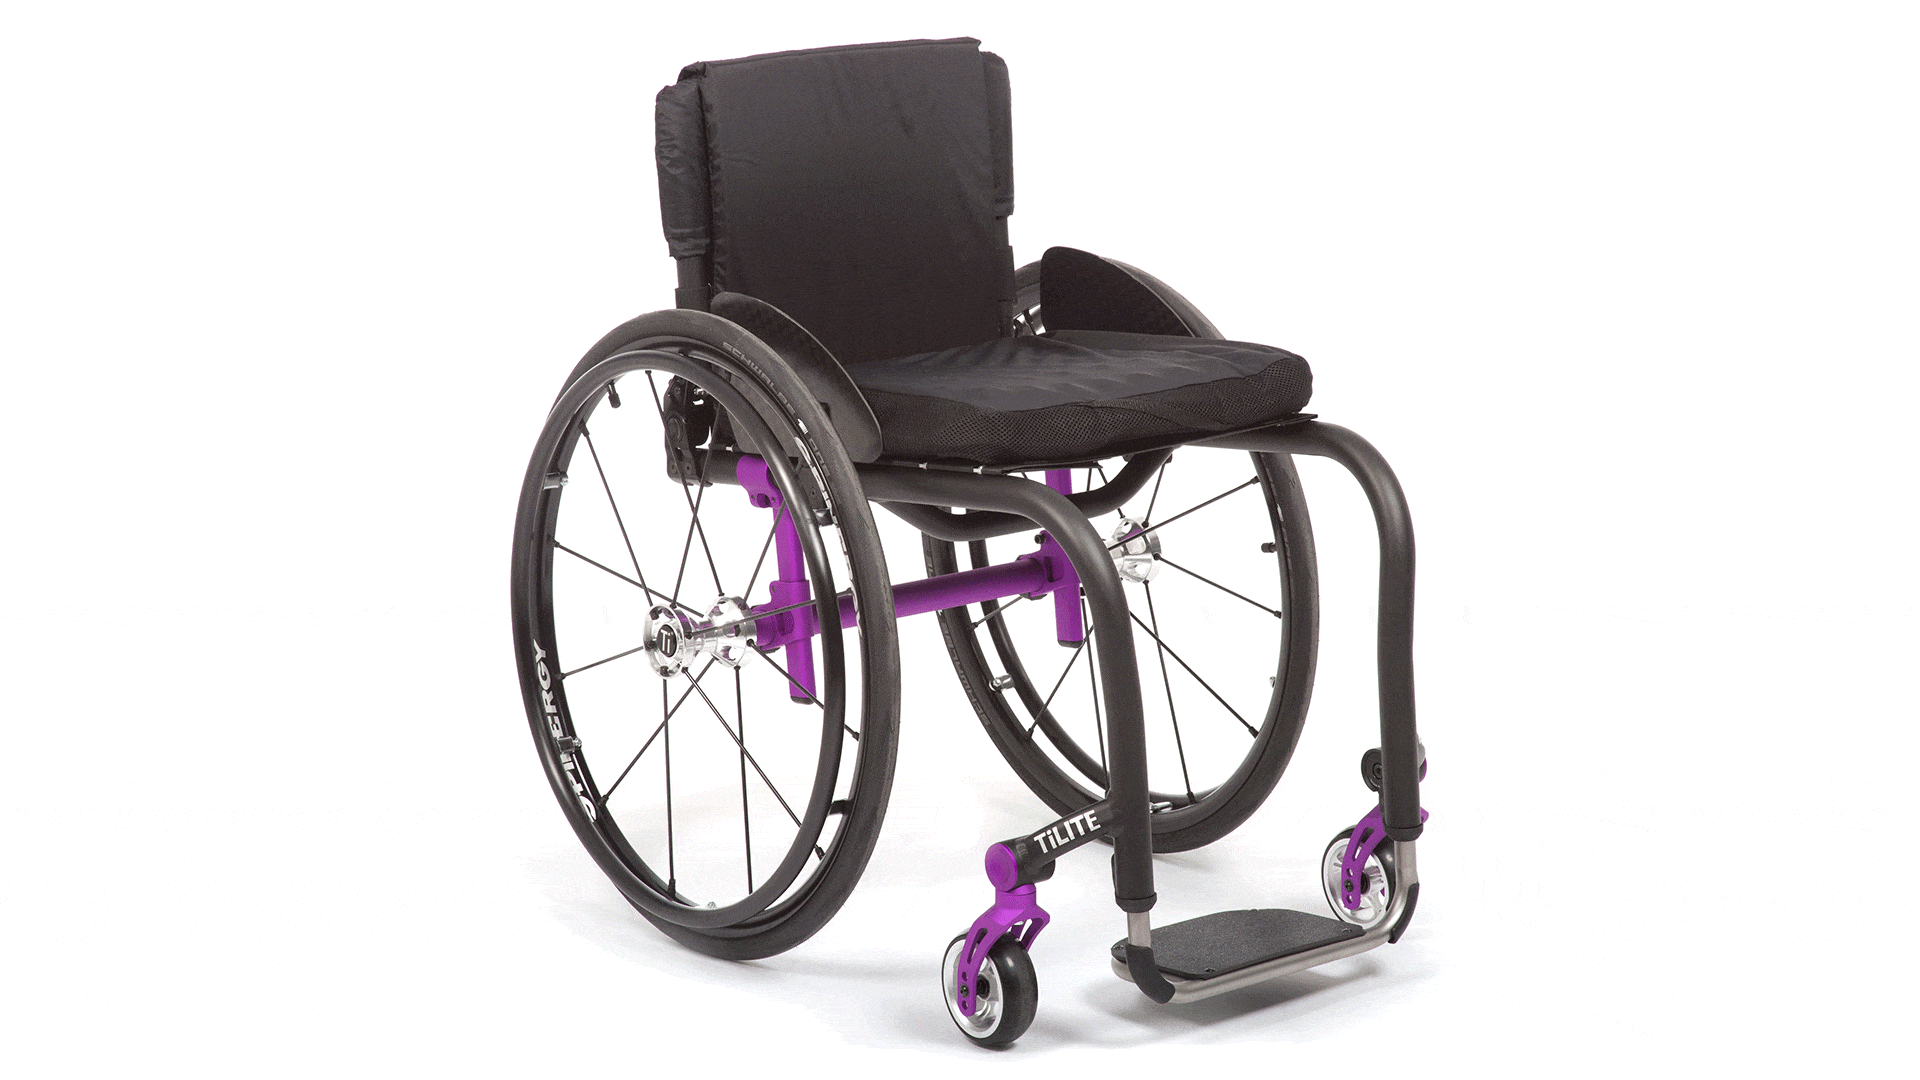 TiLite Aero Z Lightweight Rigid Wheelchairs - Gerald Simonds Healthcare